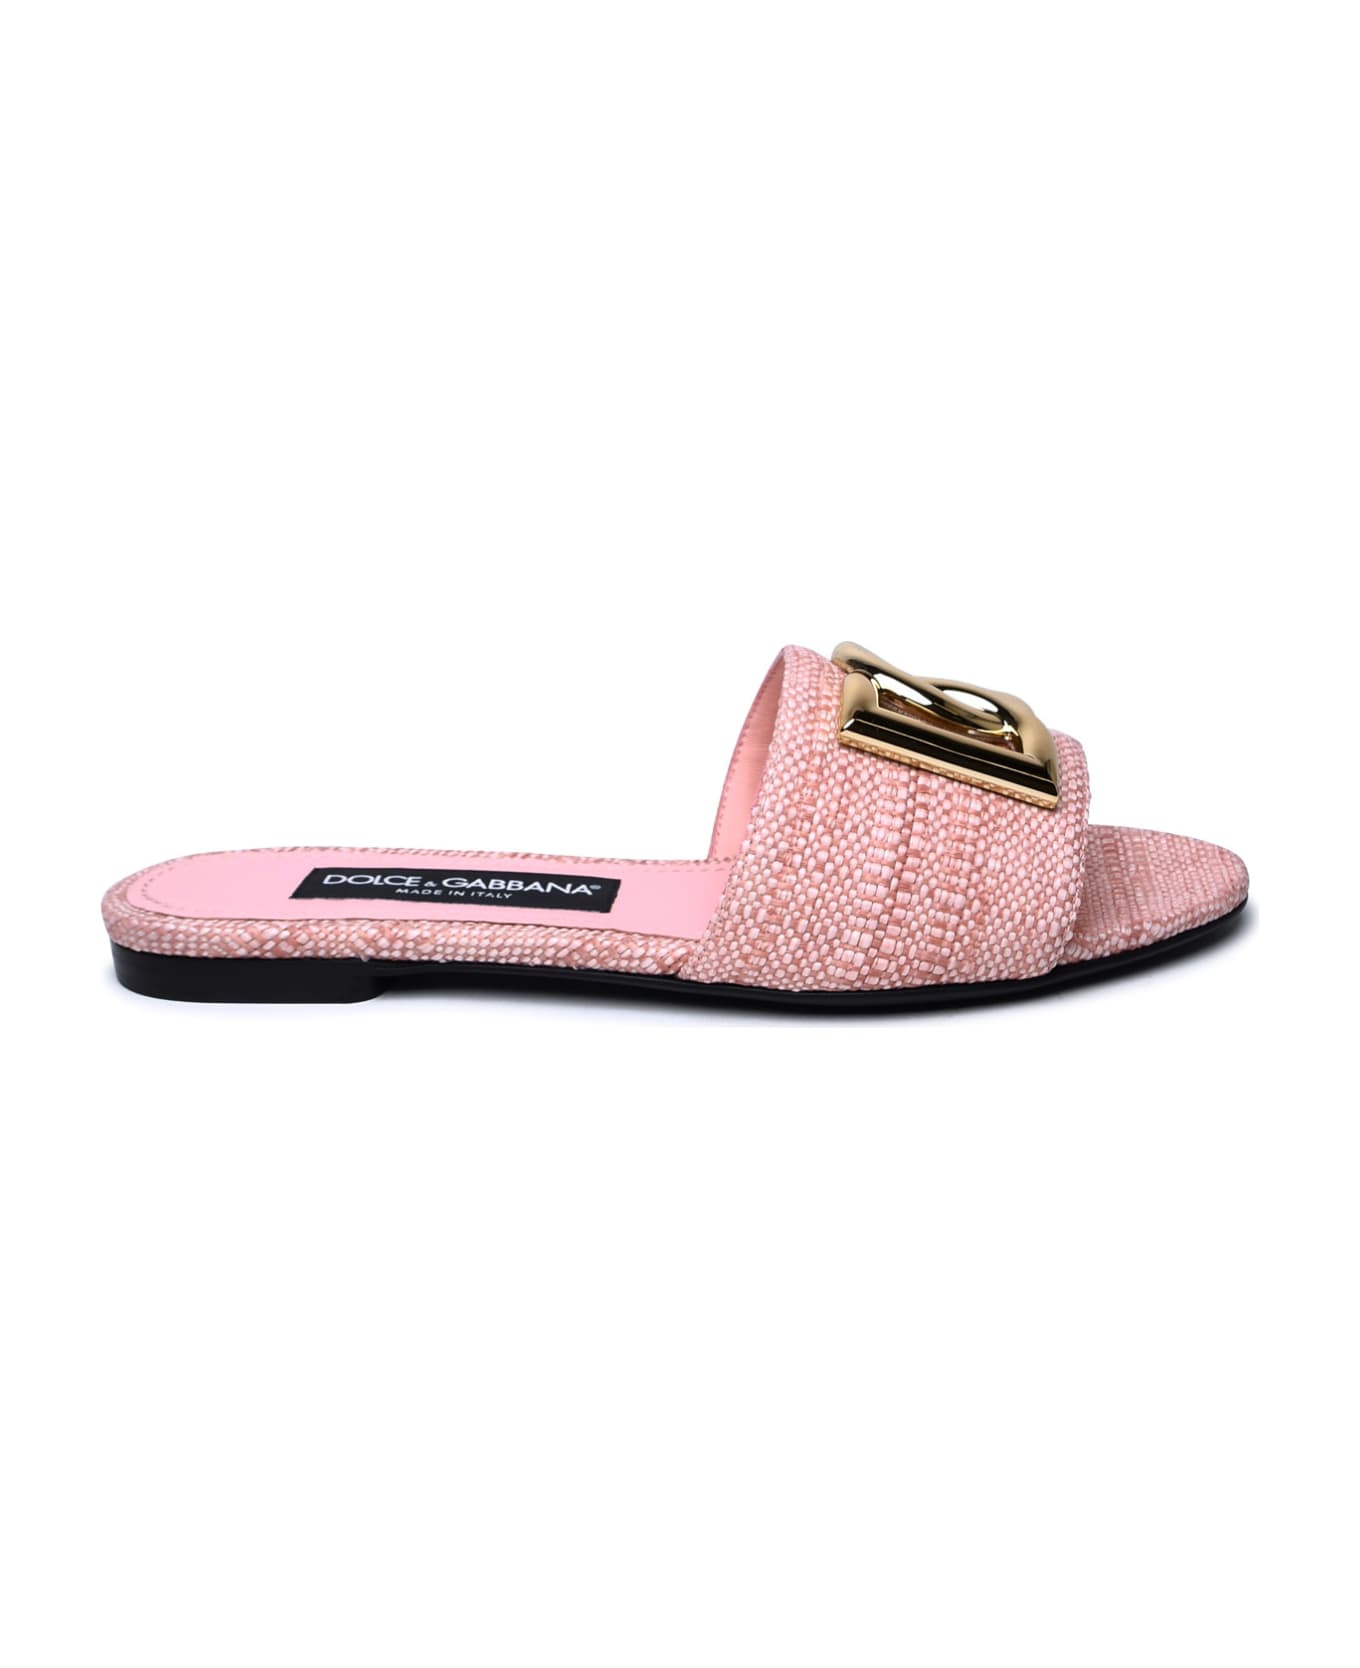 Dolce & Gabbana Pink Fabric Slippers - Pink サンダル